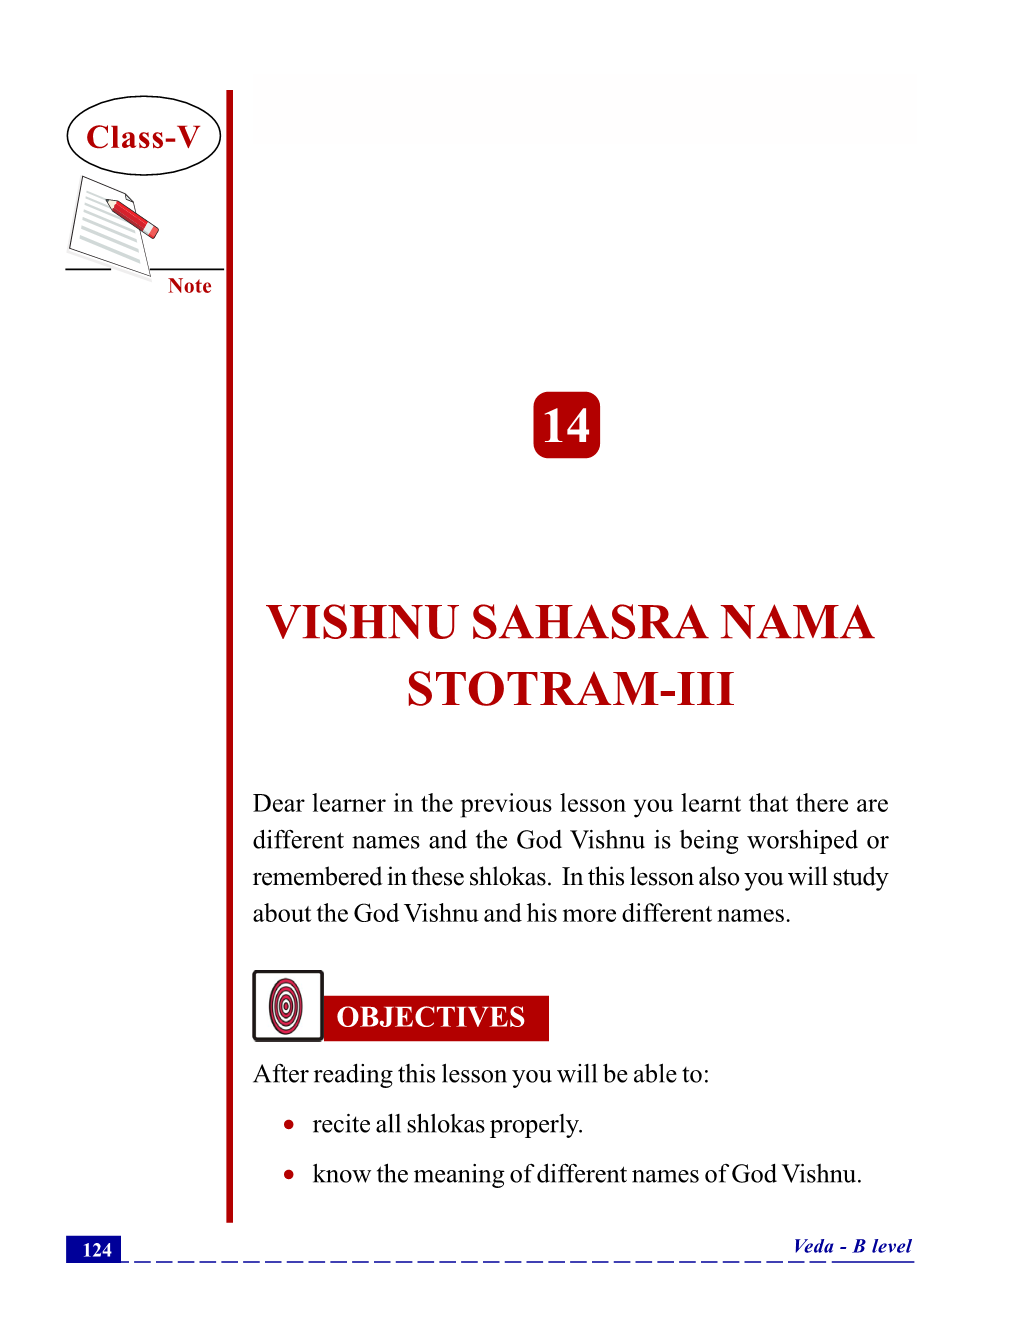 Vishnu Sahasra Nama Stotram-Iii 14